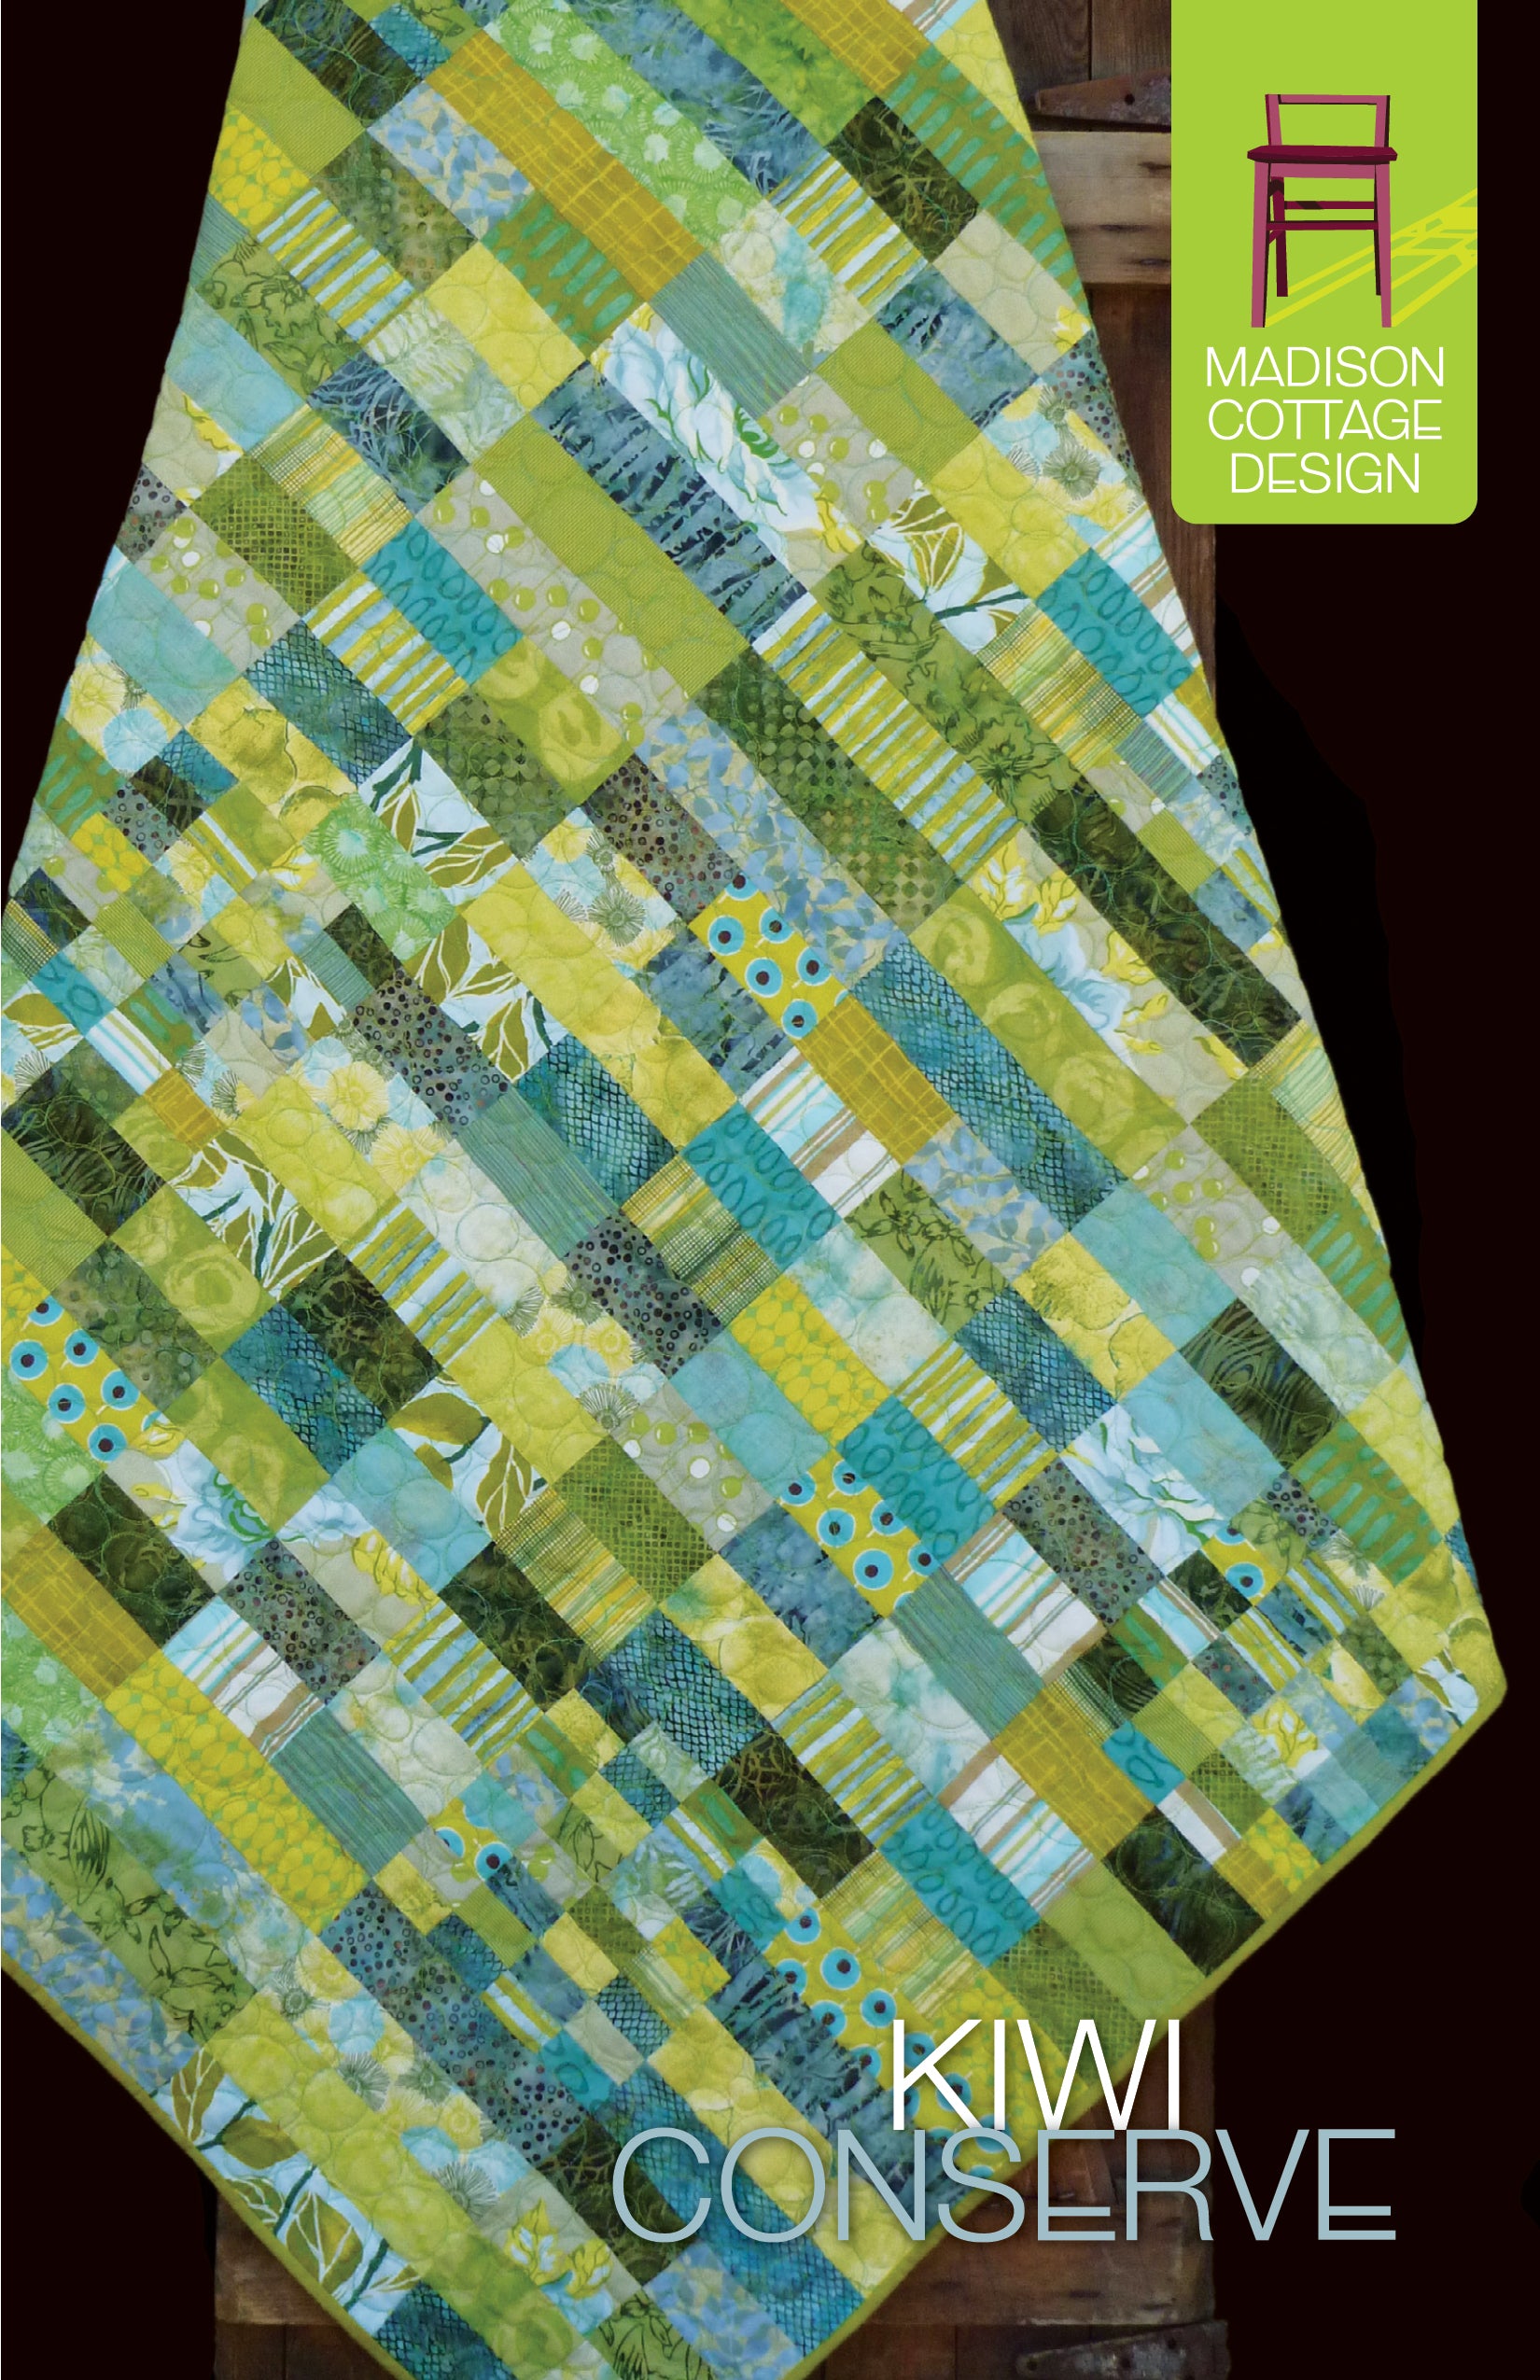 Kiwi Conserve Quilt Pattern by Madison Cottage Design